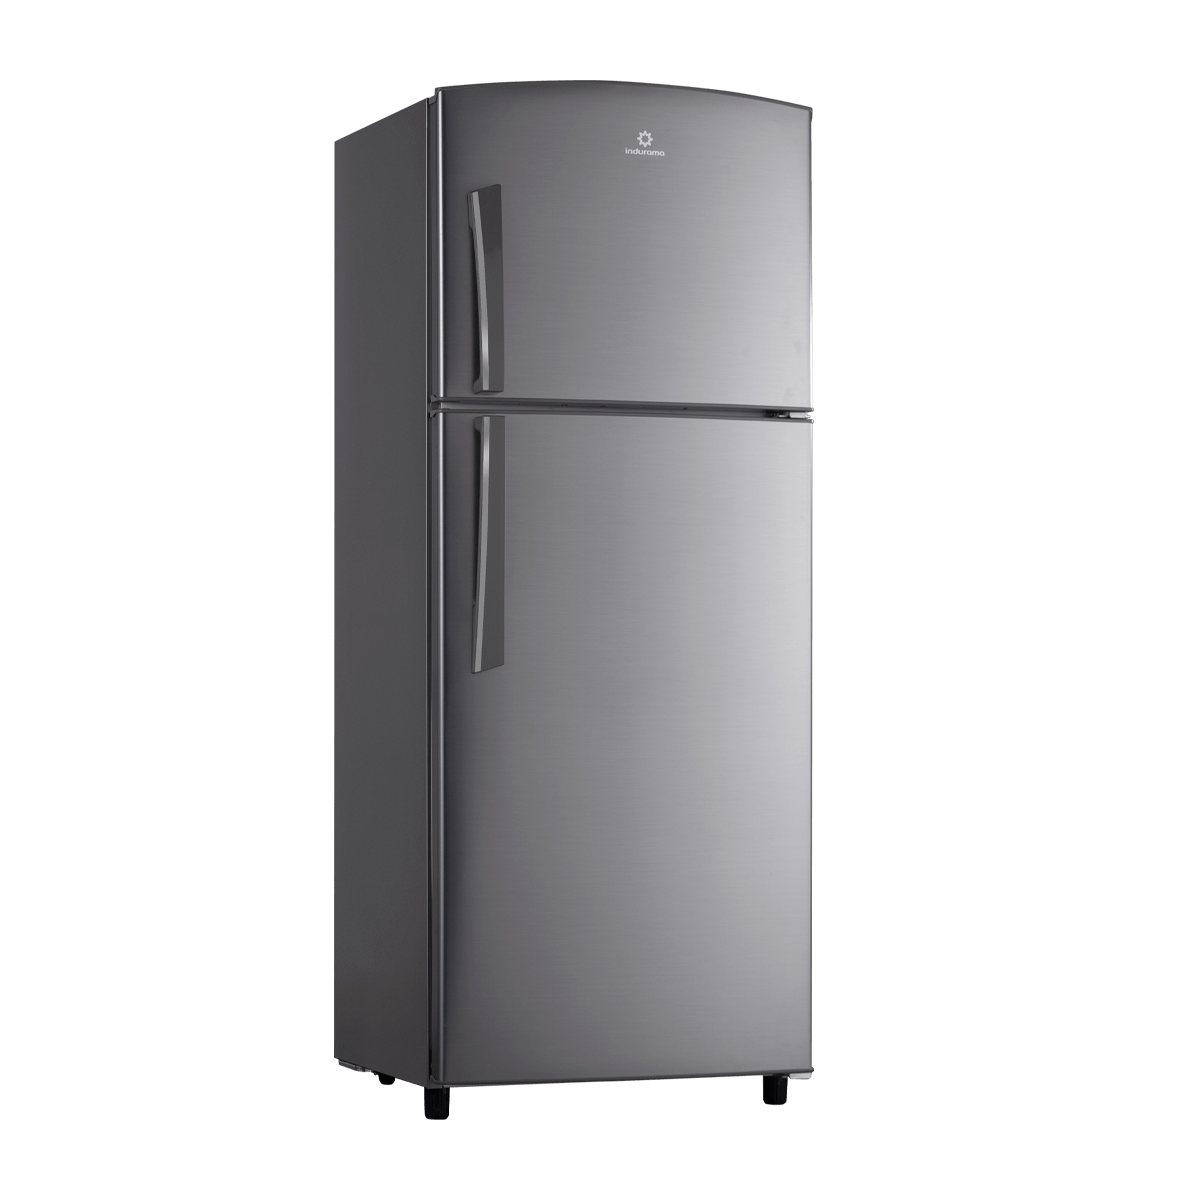 Tecnocosto - Indurama - Refrigeradora RI-375 245 Litros 12 pies